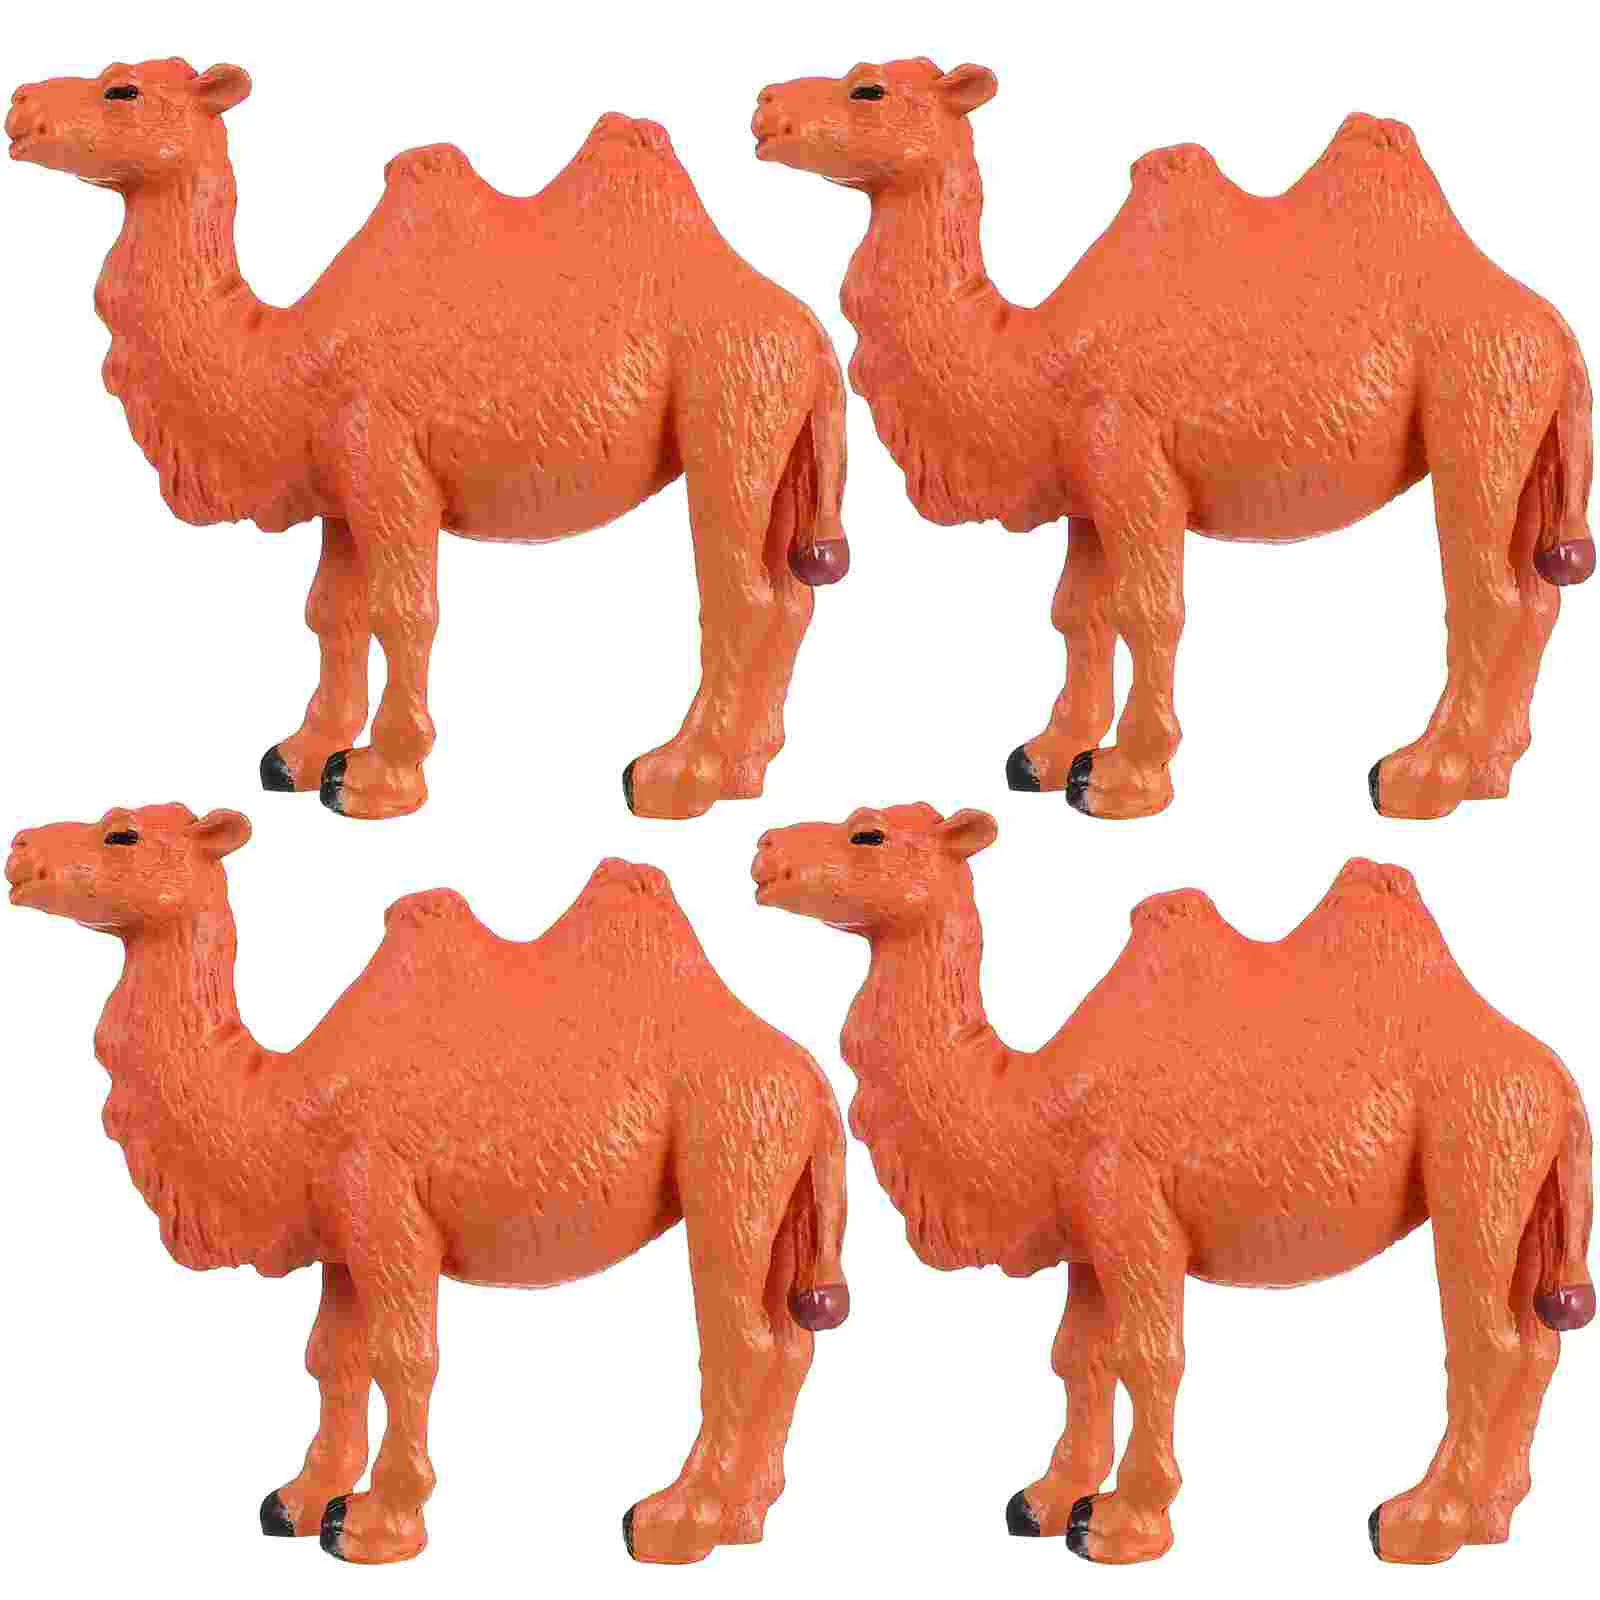 

Camel Model Vivid Statues Adornments Figurines Animals Small Ornament Decors Toys